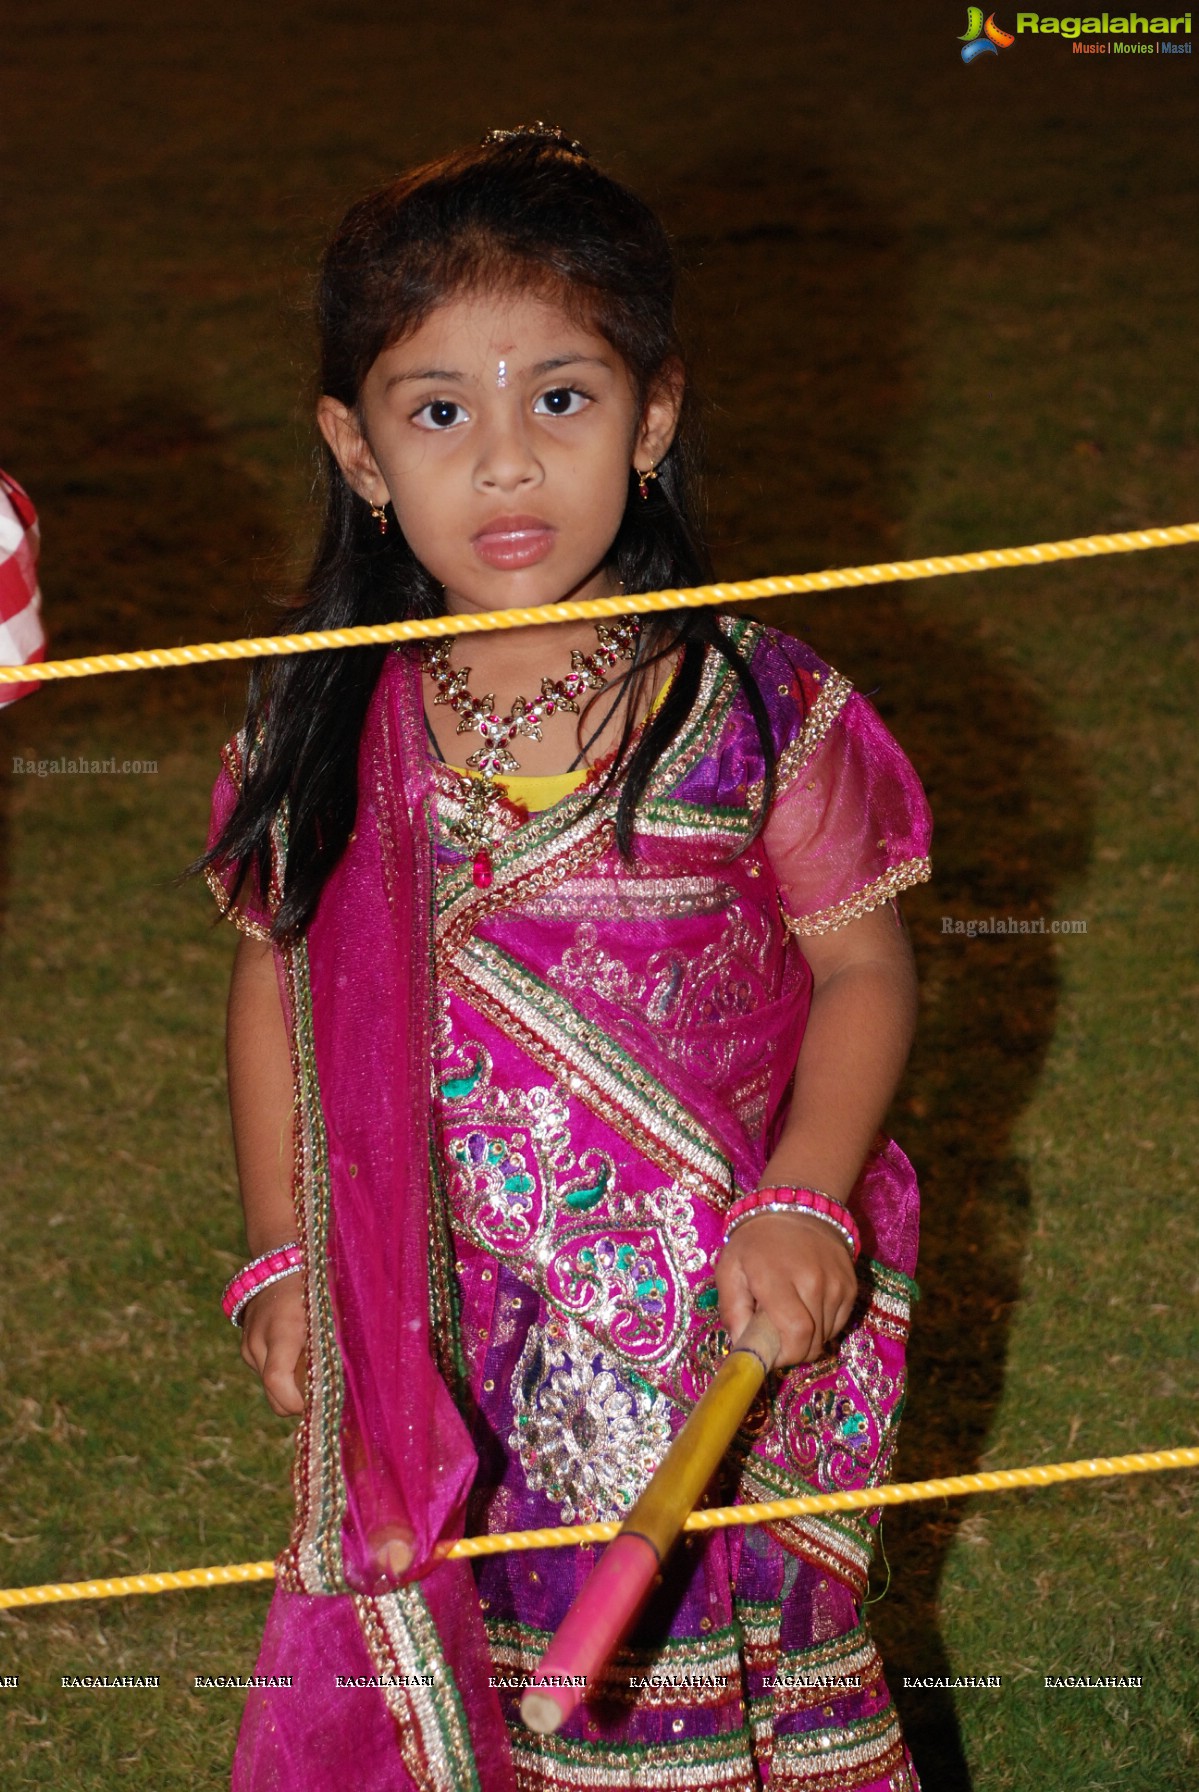 Coconut Event Dildar Dandiya 2015 (Day 4) at Shamshabad, Hyderabad